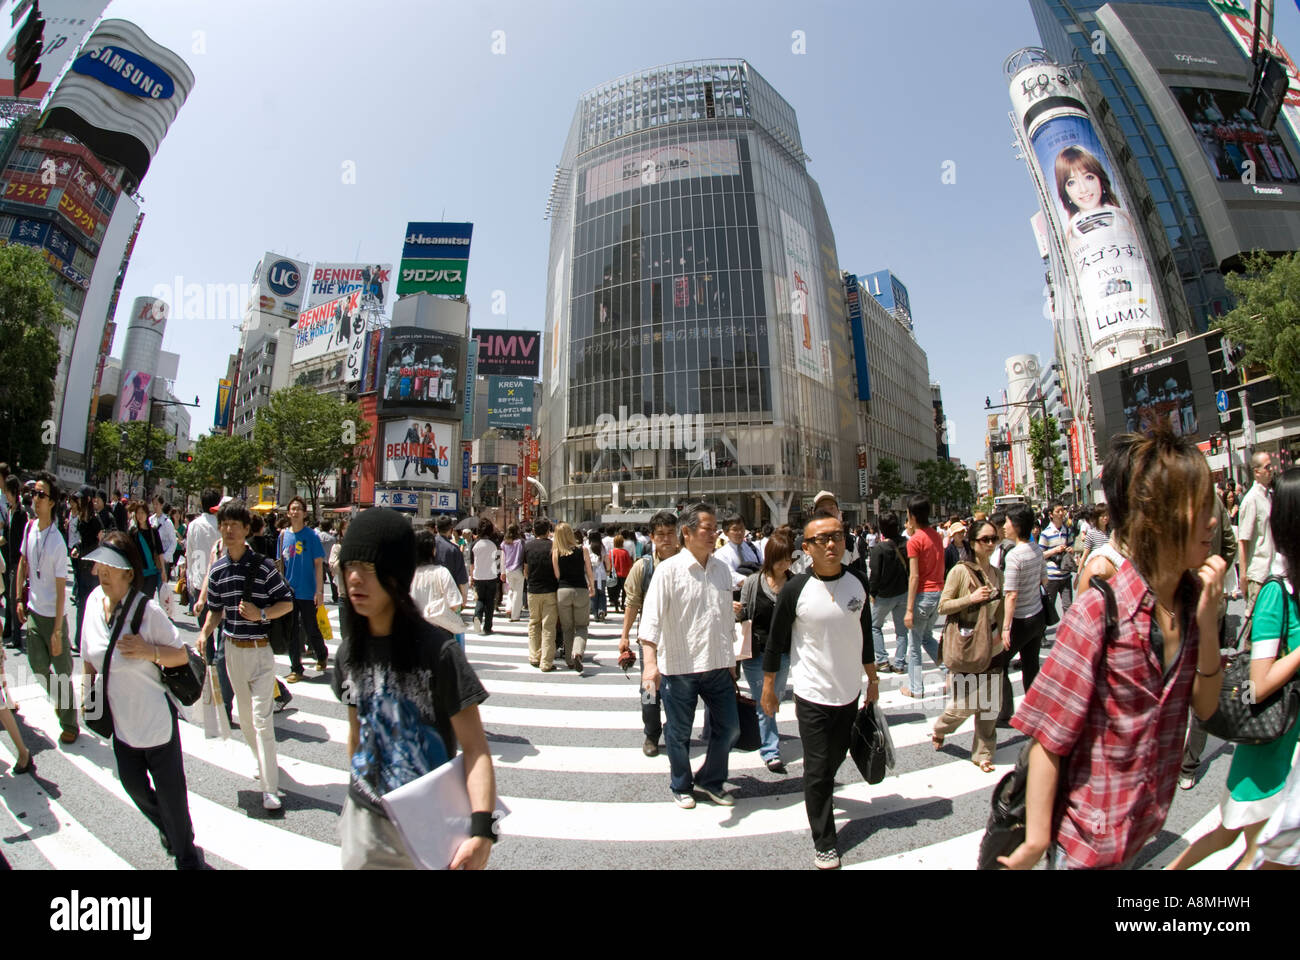 Busy street crossing at Hachiko Square in Shibuya Tokyo, Japan fisheye lens Stock Photo